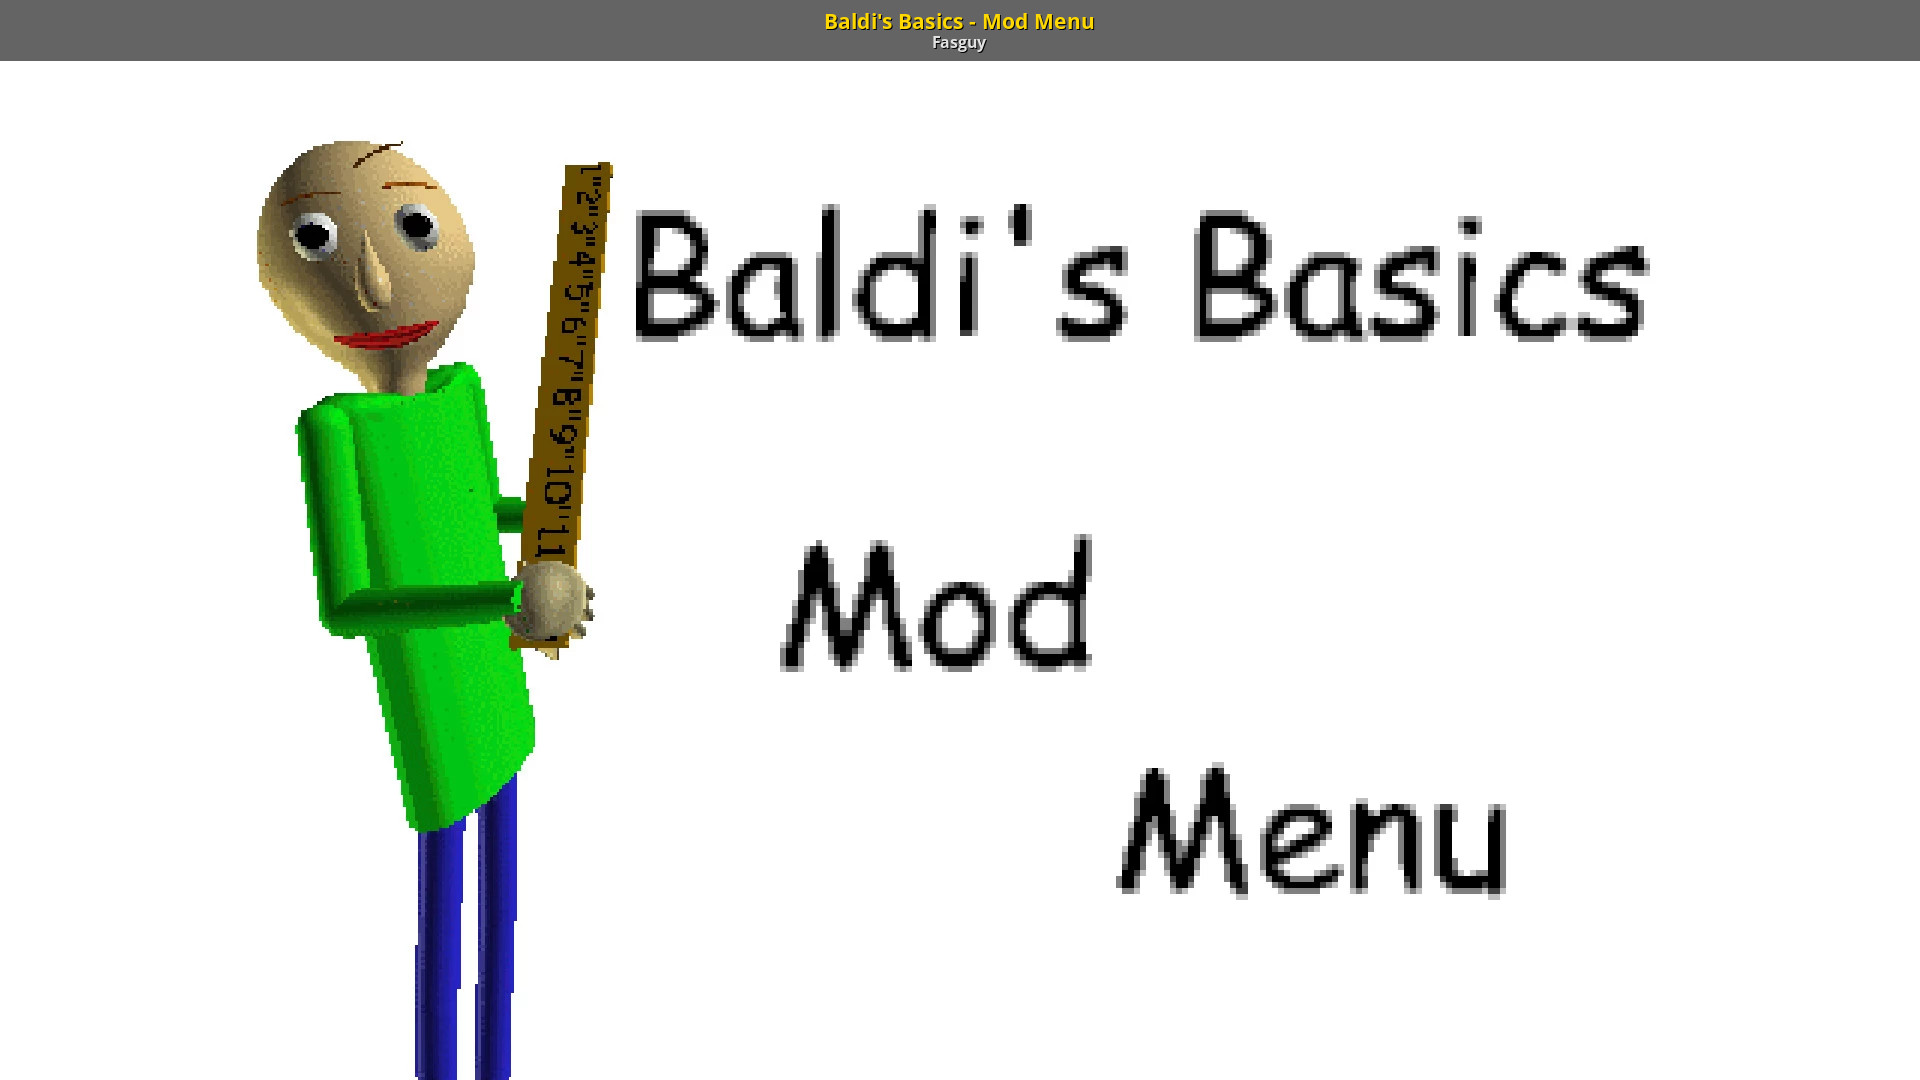 Baldis basics cheats